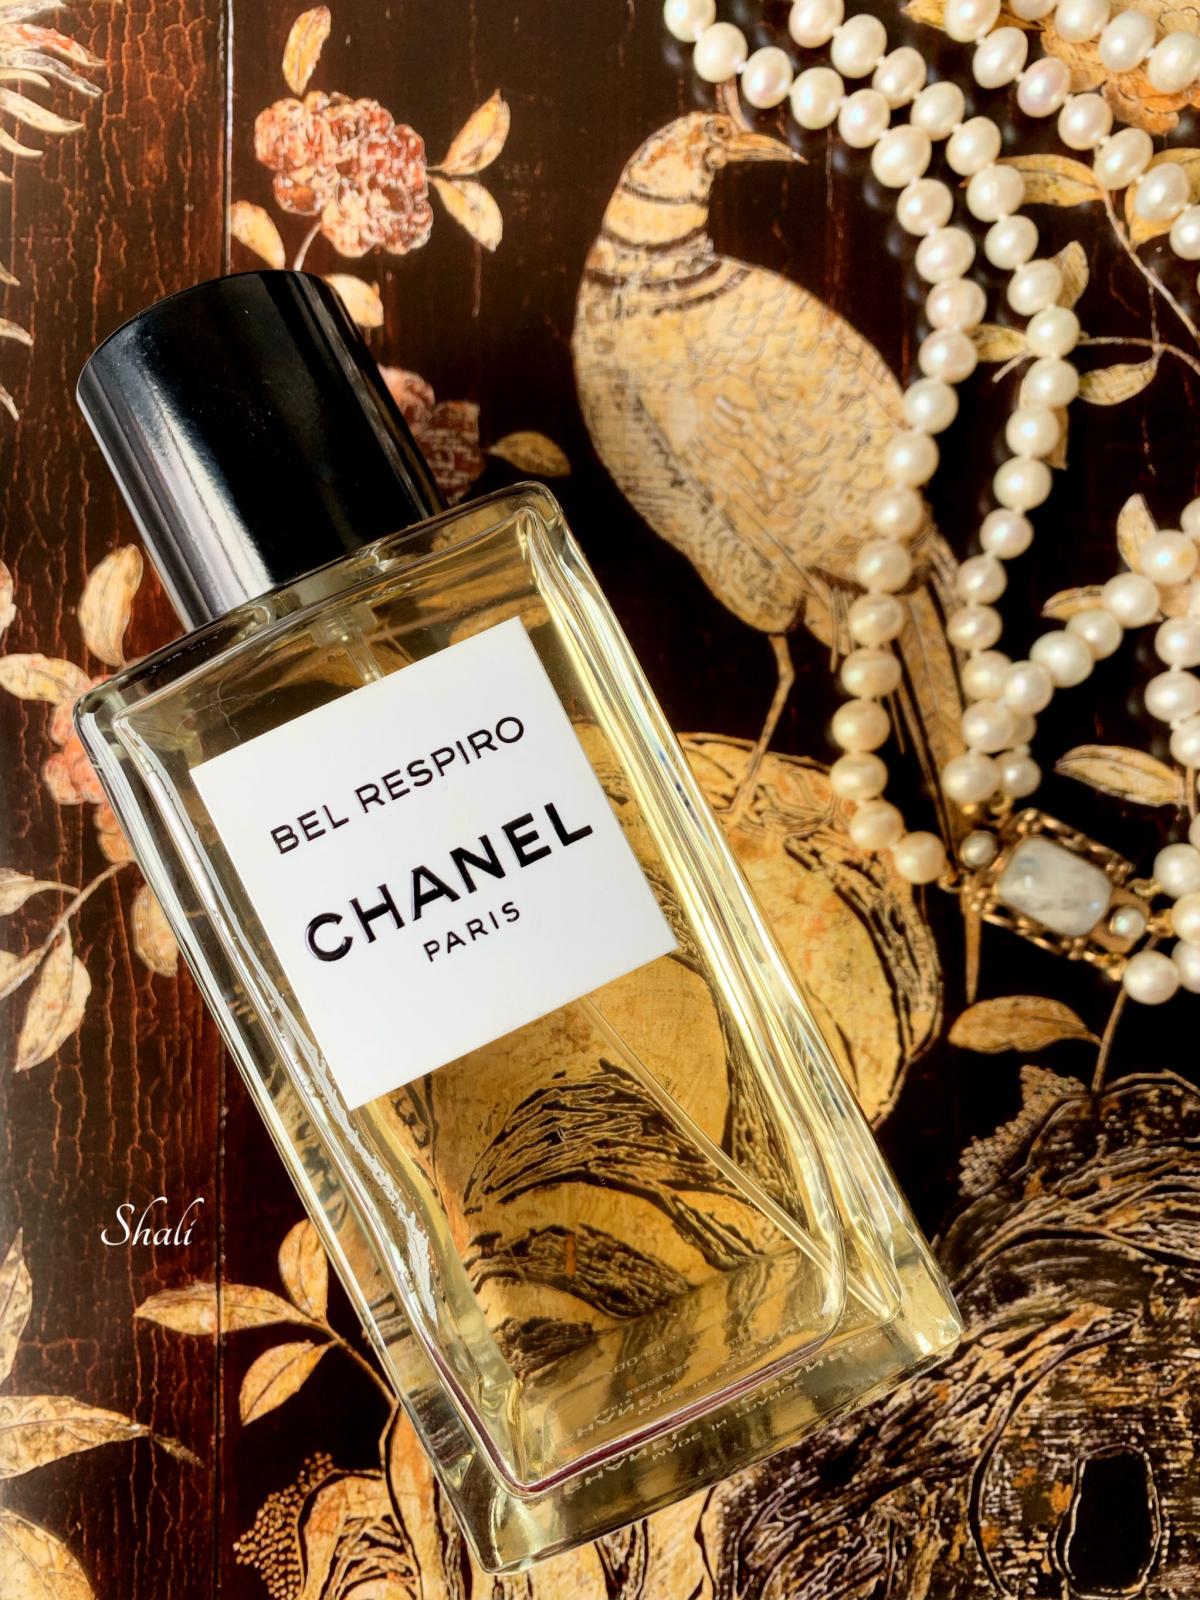 Les Exclusifs de Chanel Bel Respiro Chanel perfume - a fragrance for